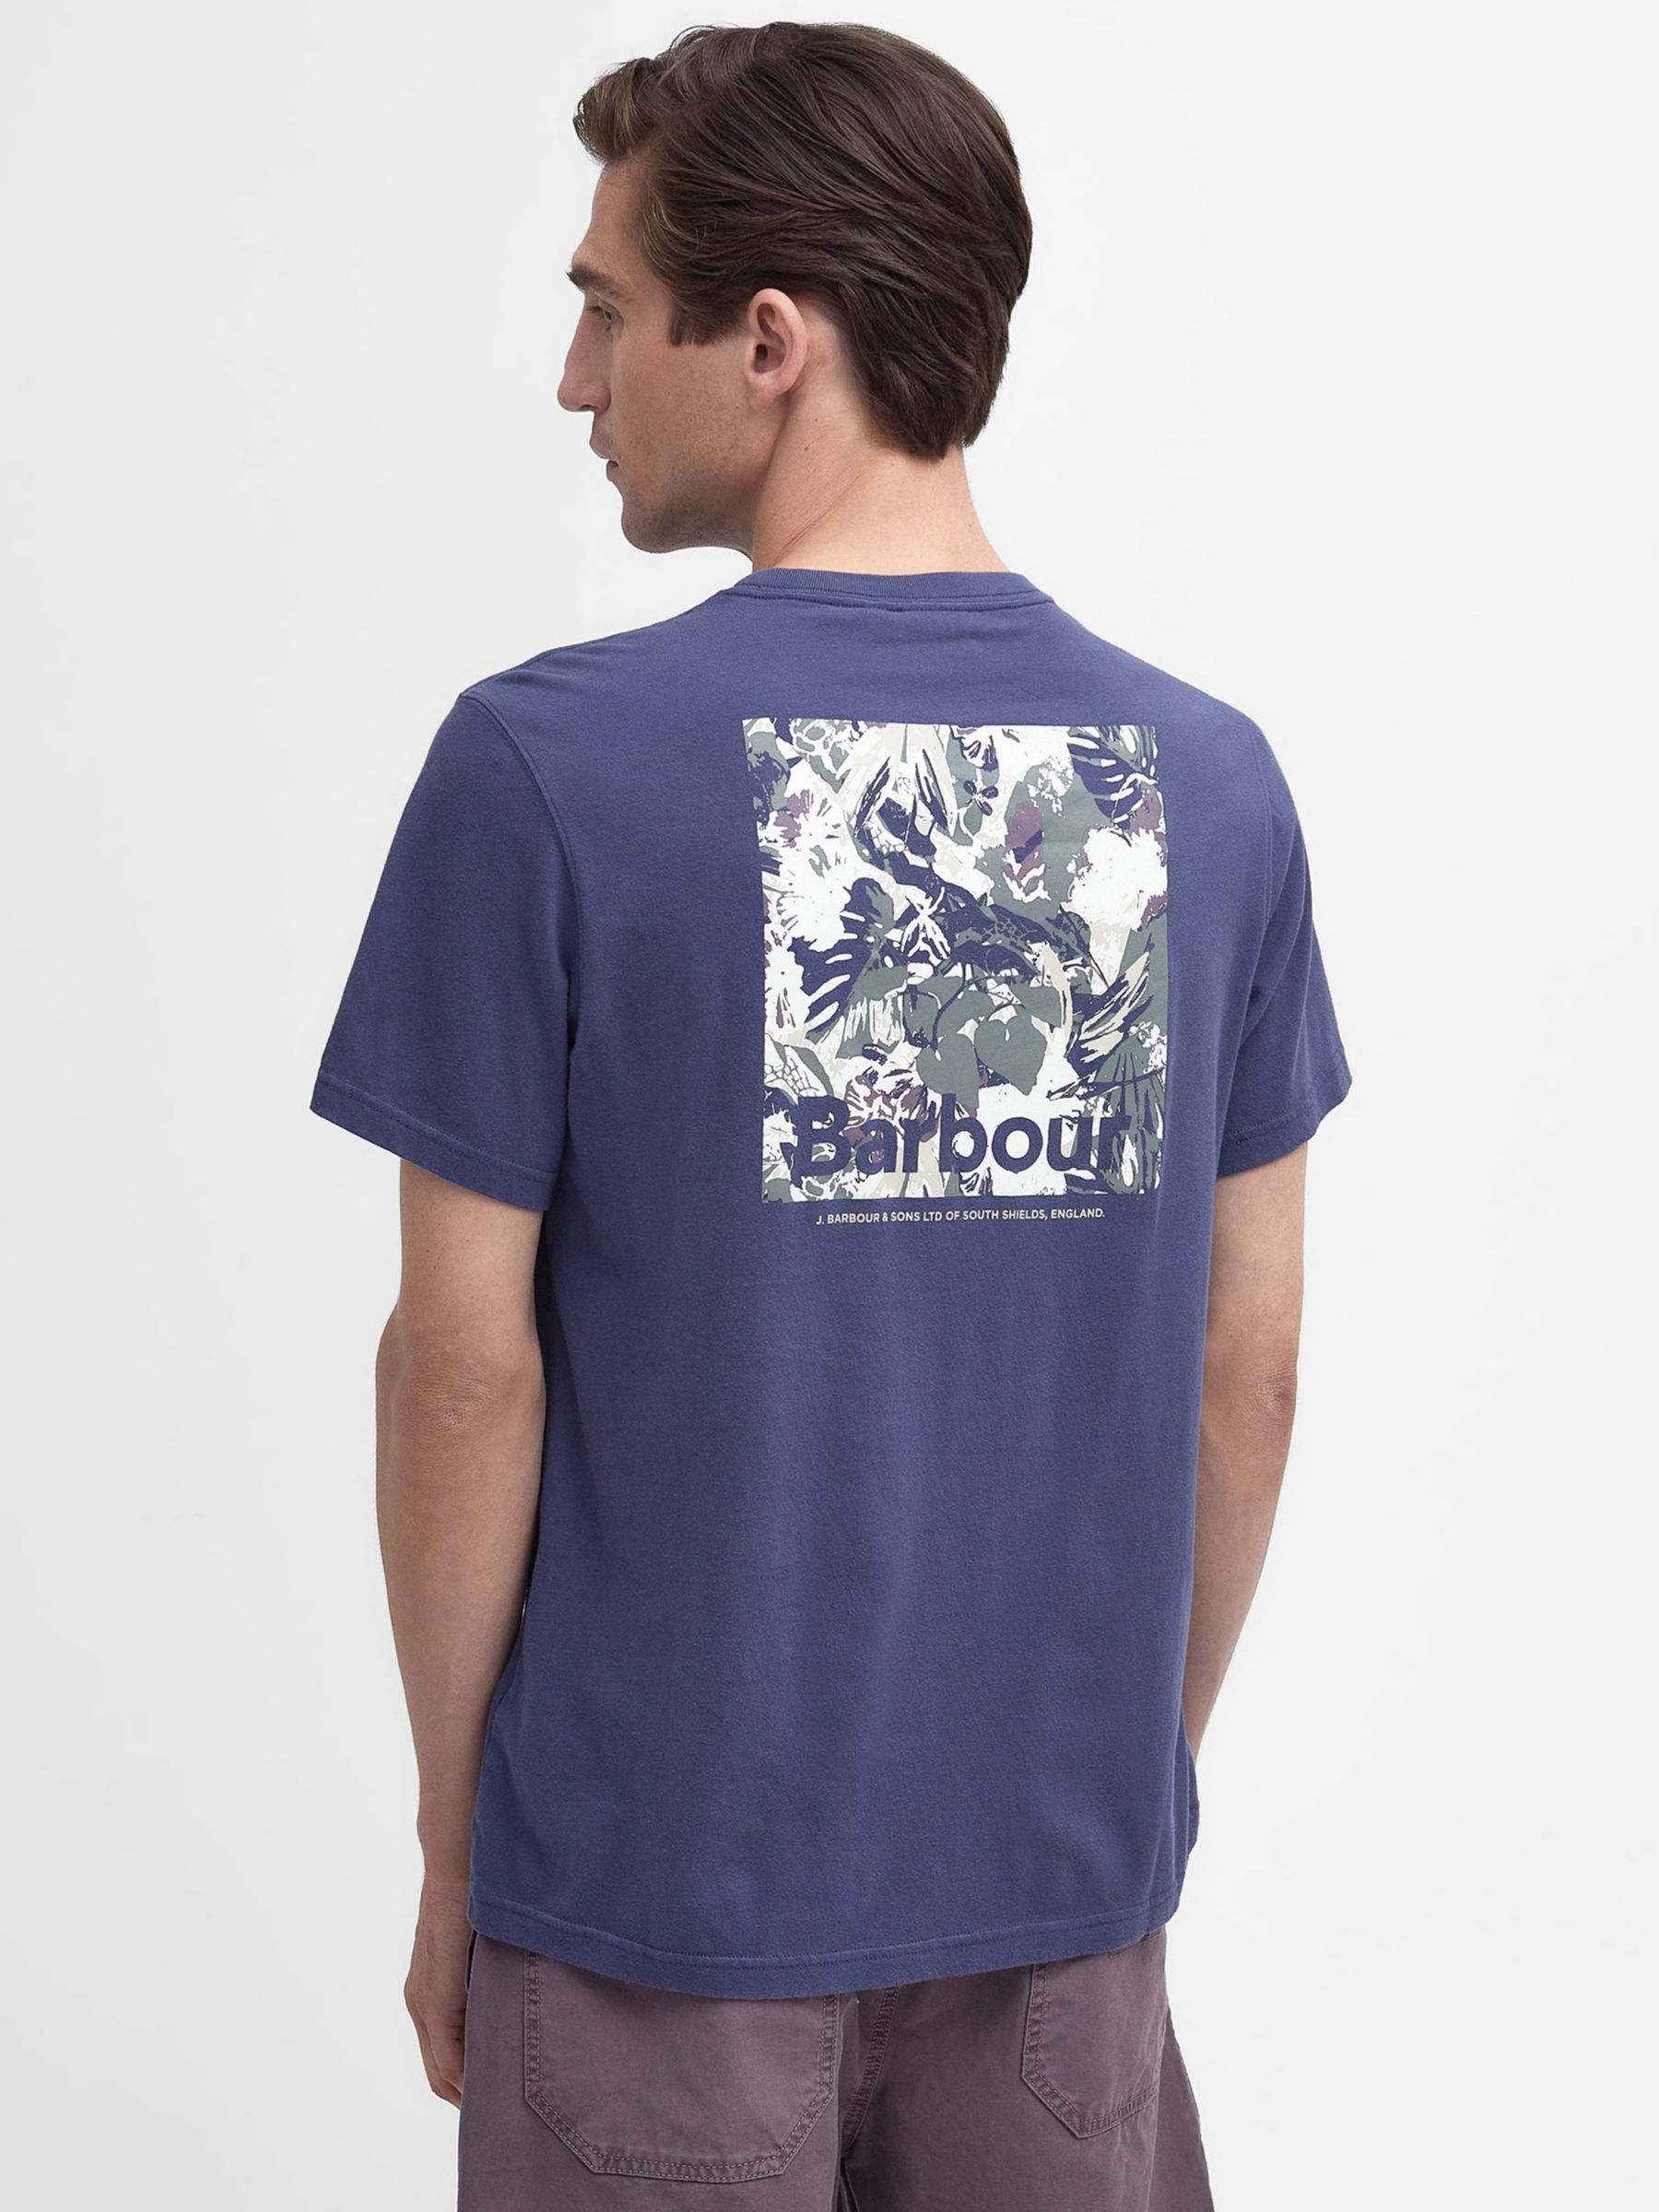 Barbour Hindle Graphic T-Shirt, Oceana, L